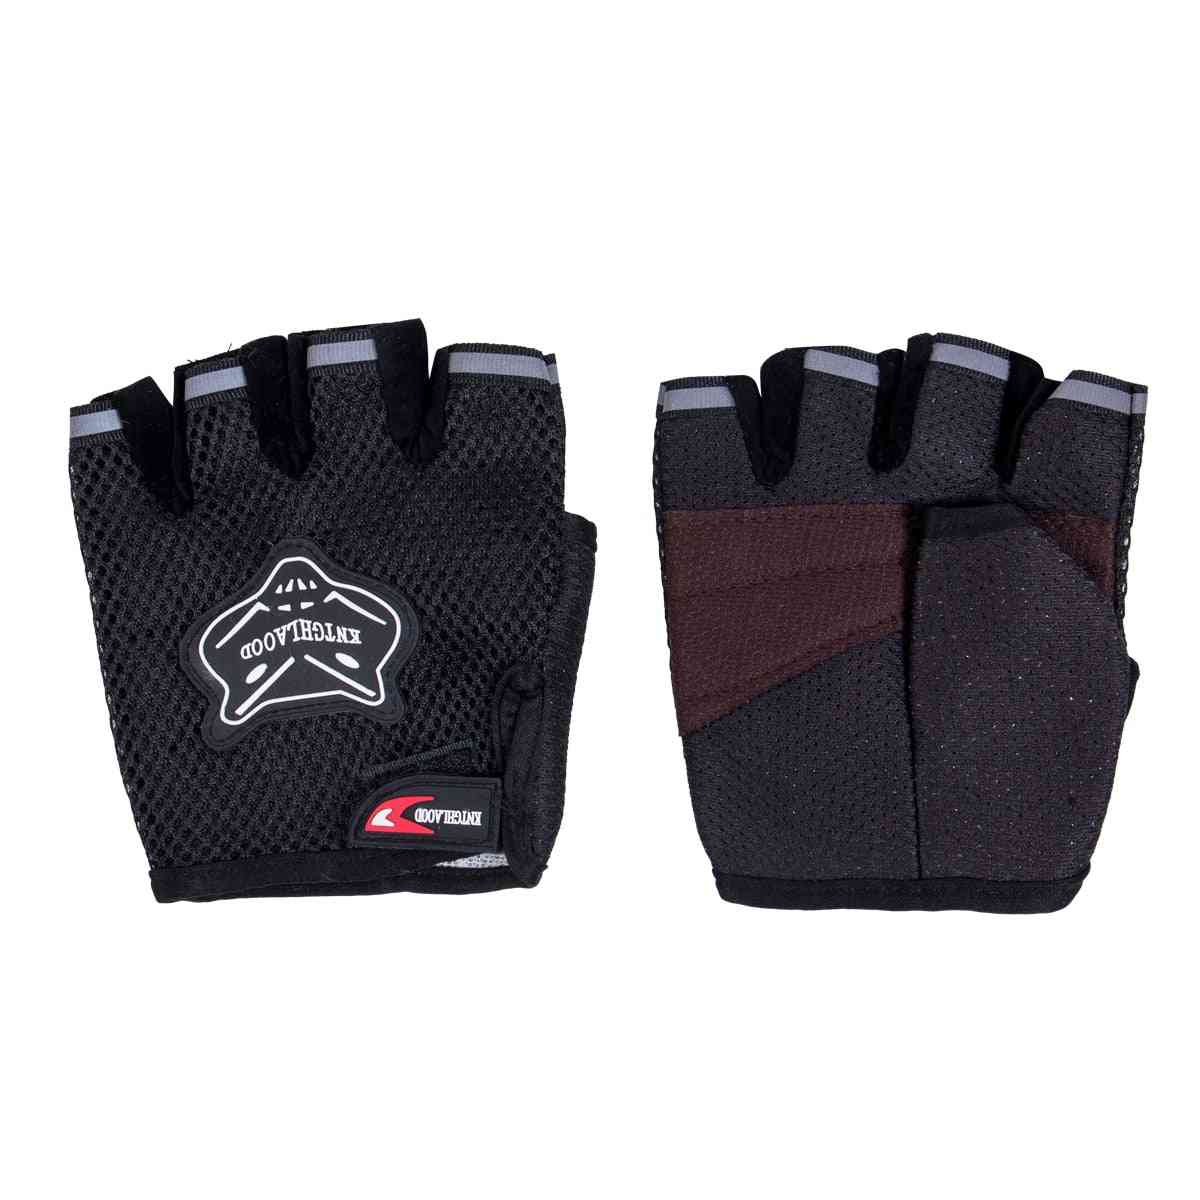 Half Finger Mesh Cycling Gloves